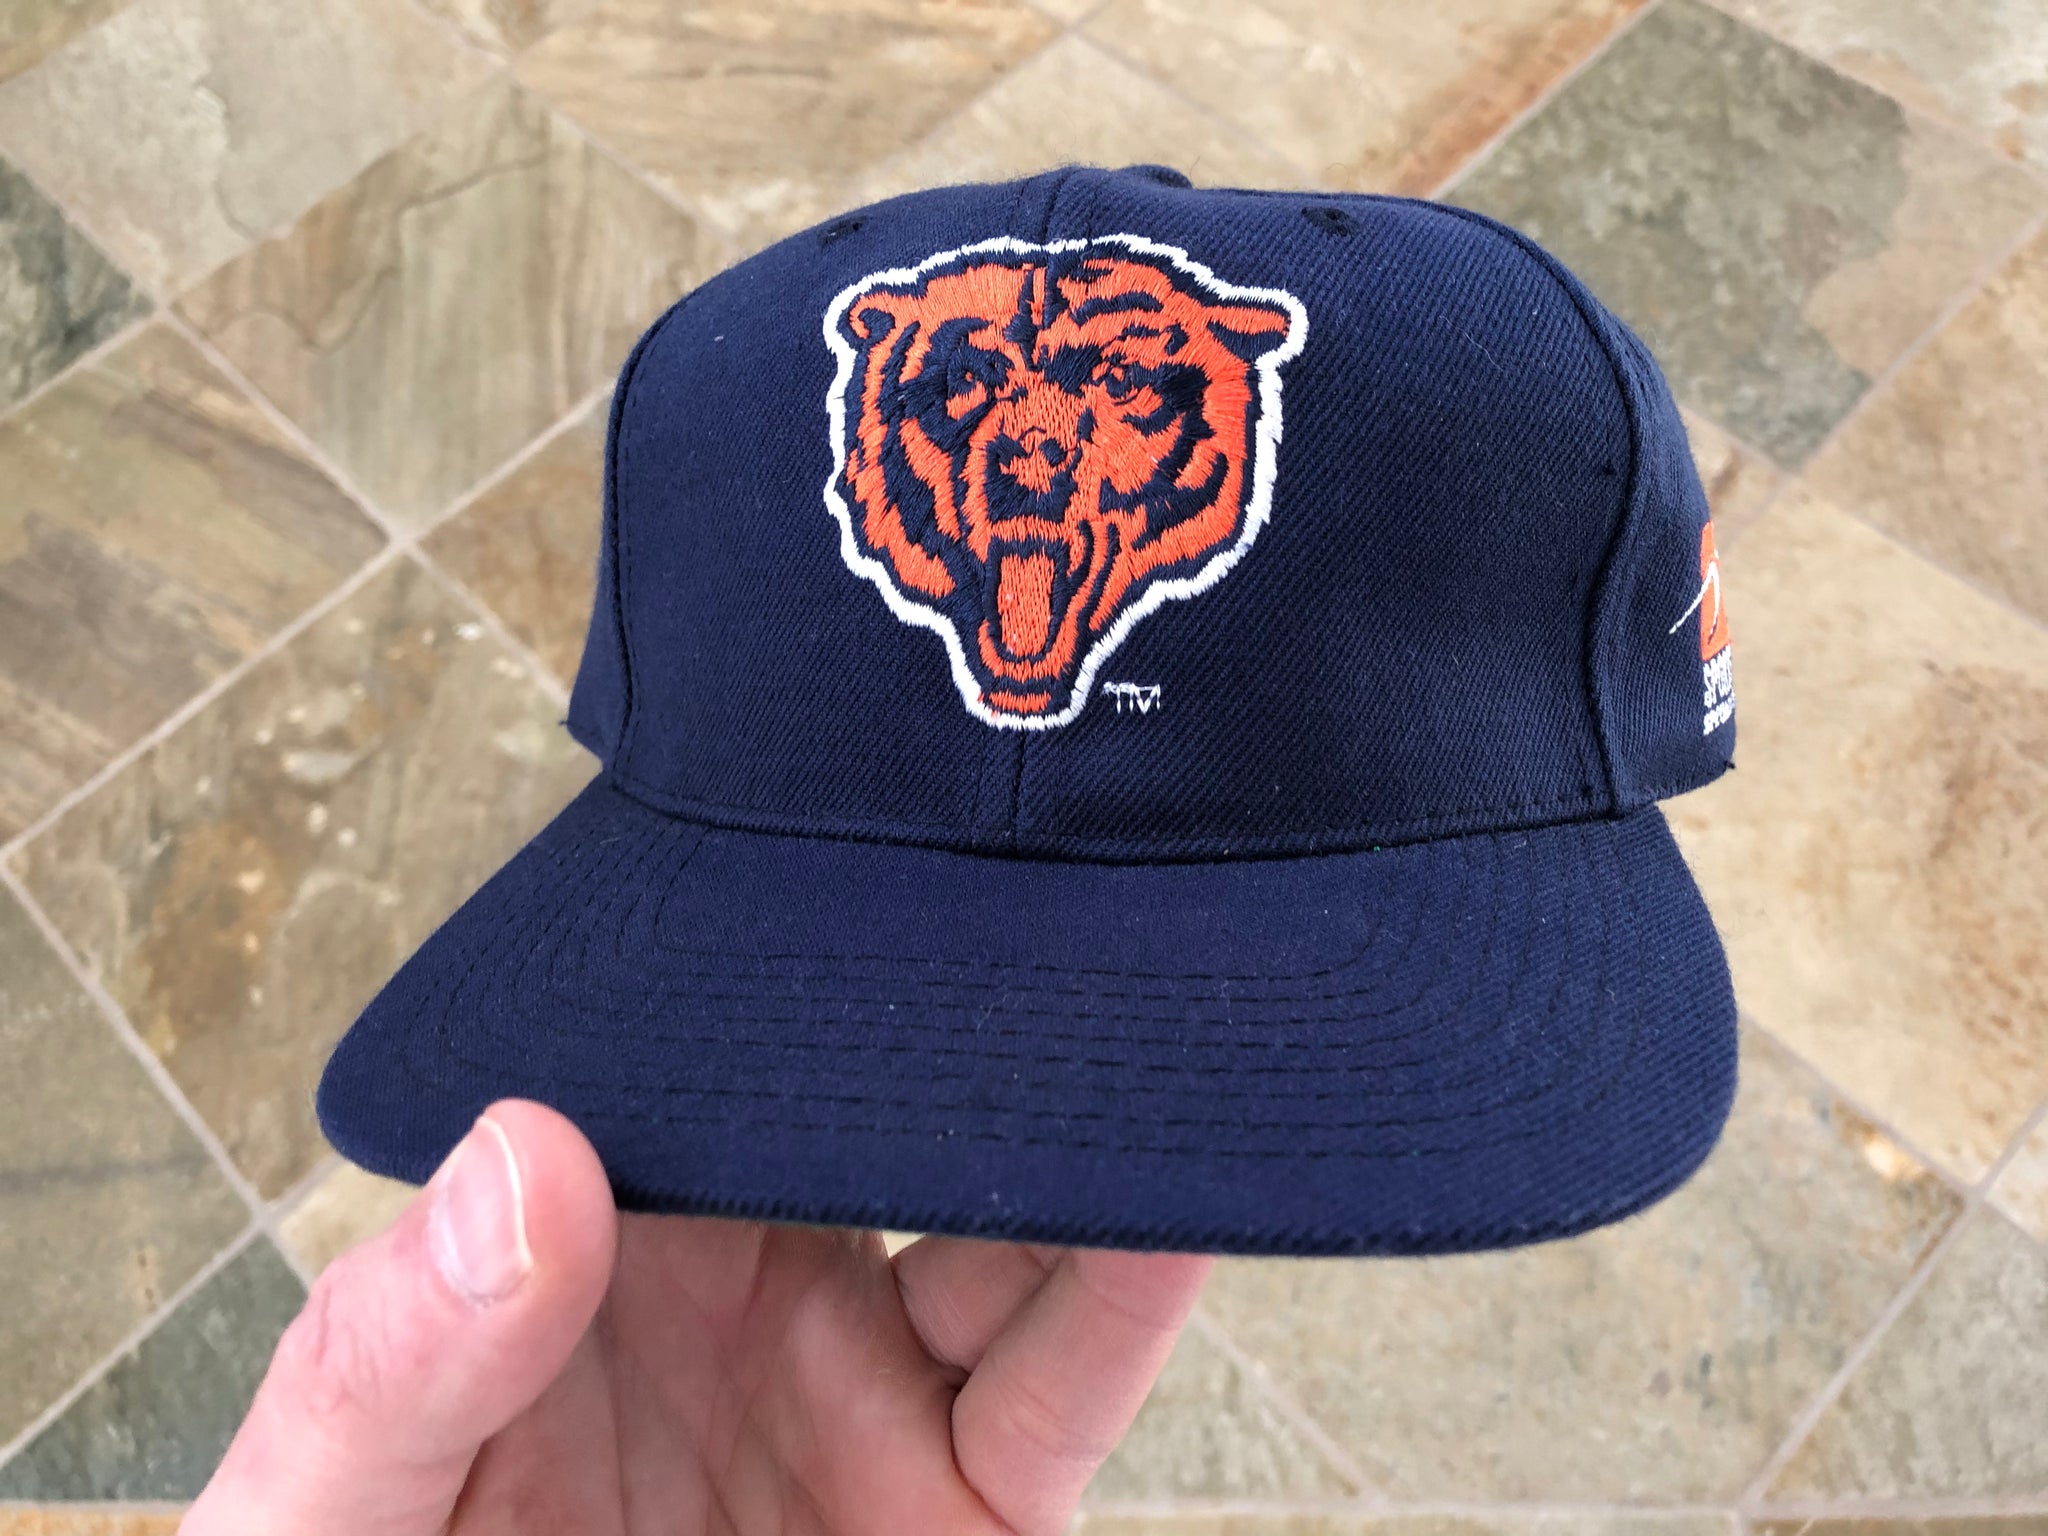 chicago bears cap vintage